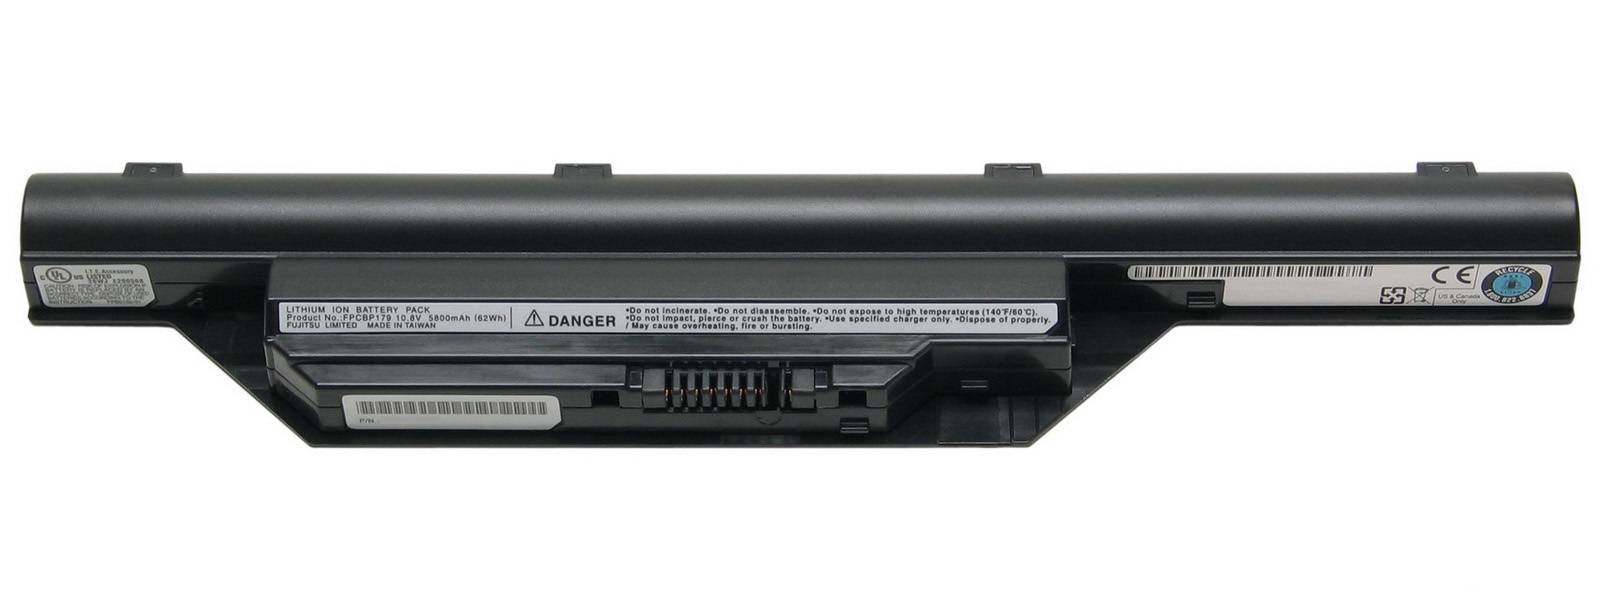 Fujitsu Lifebook S6410-battrry